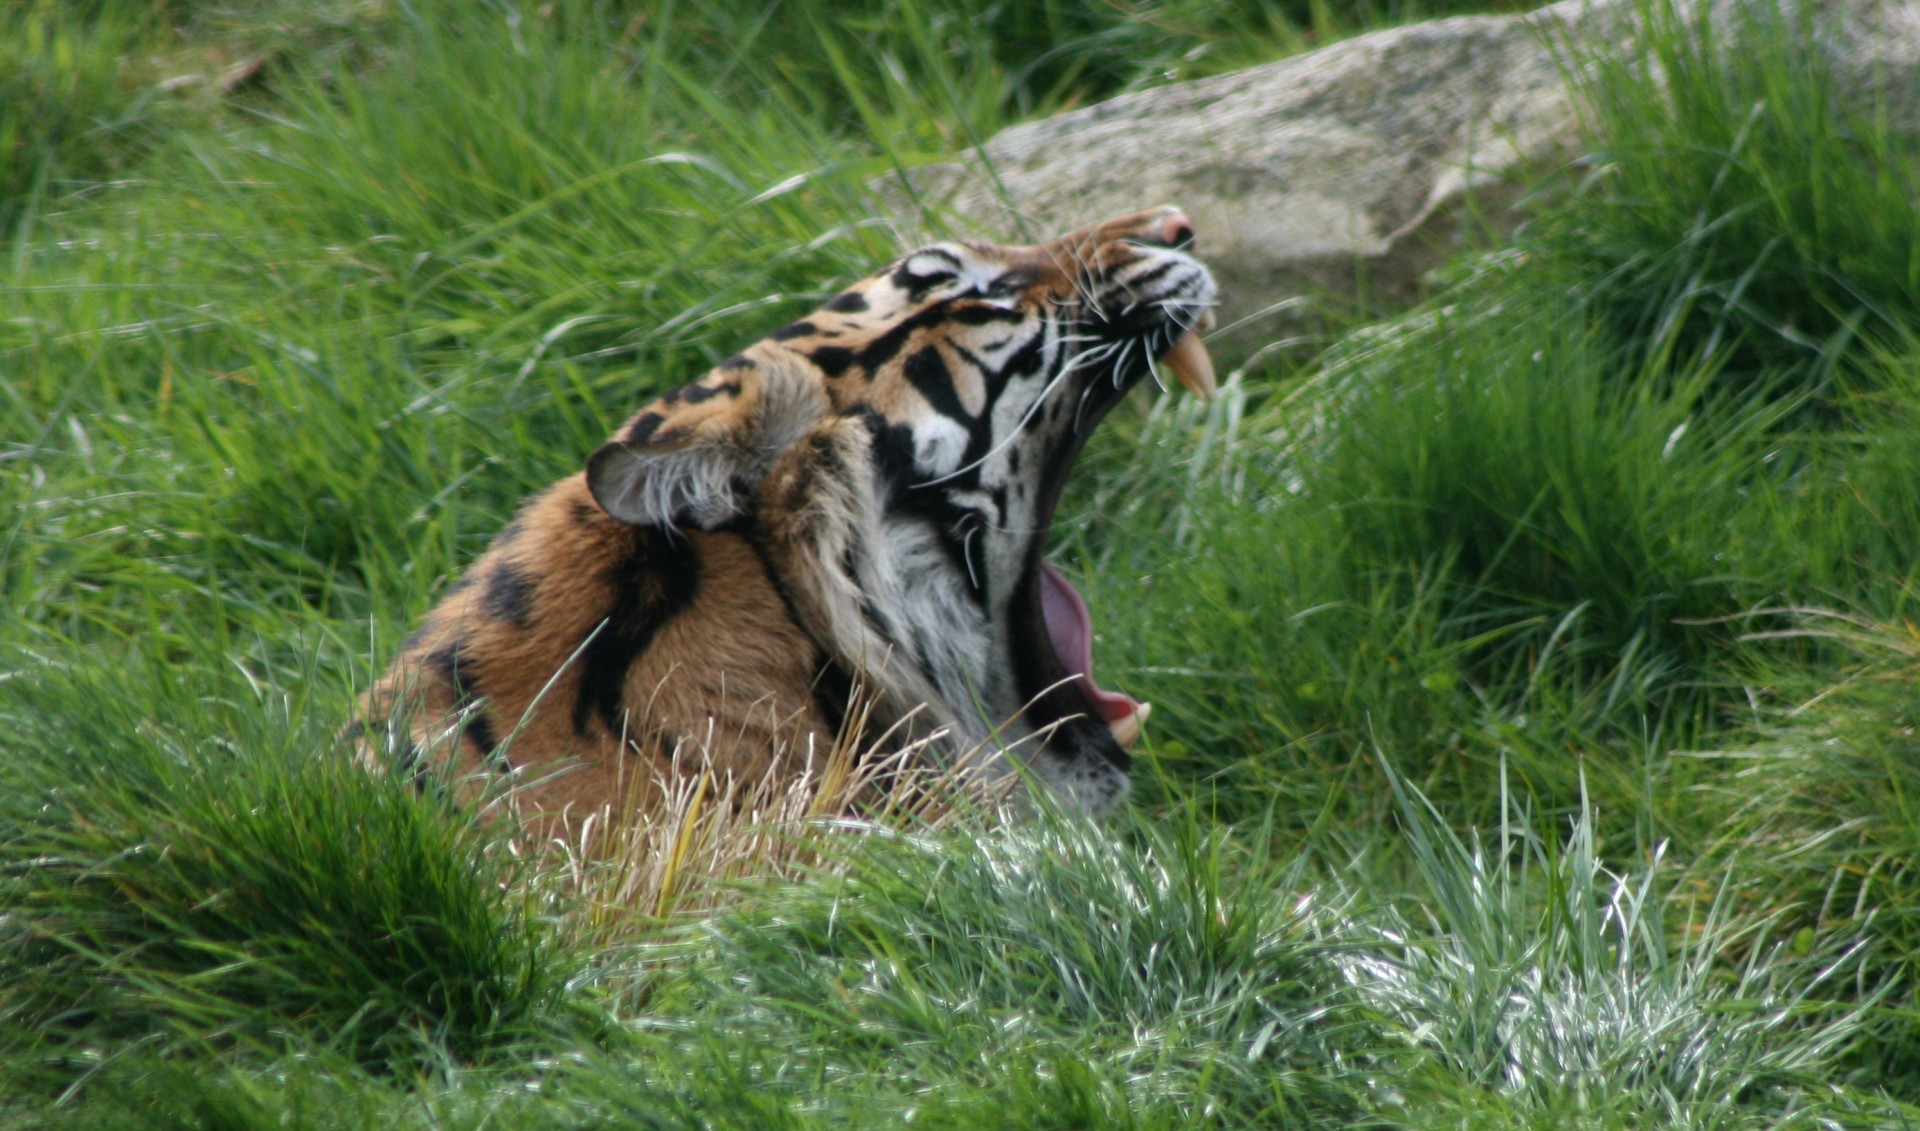 Roaring or yawning tiger